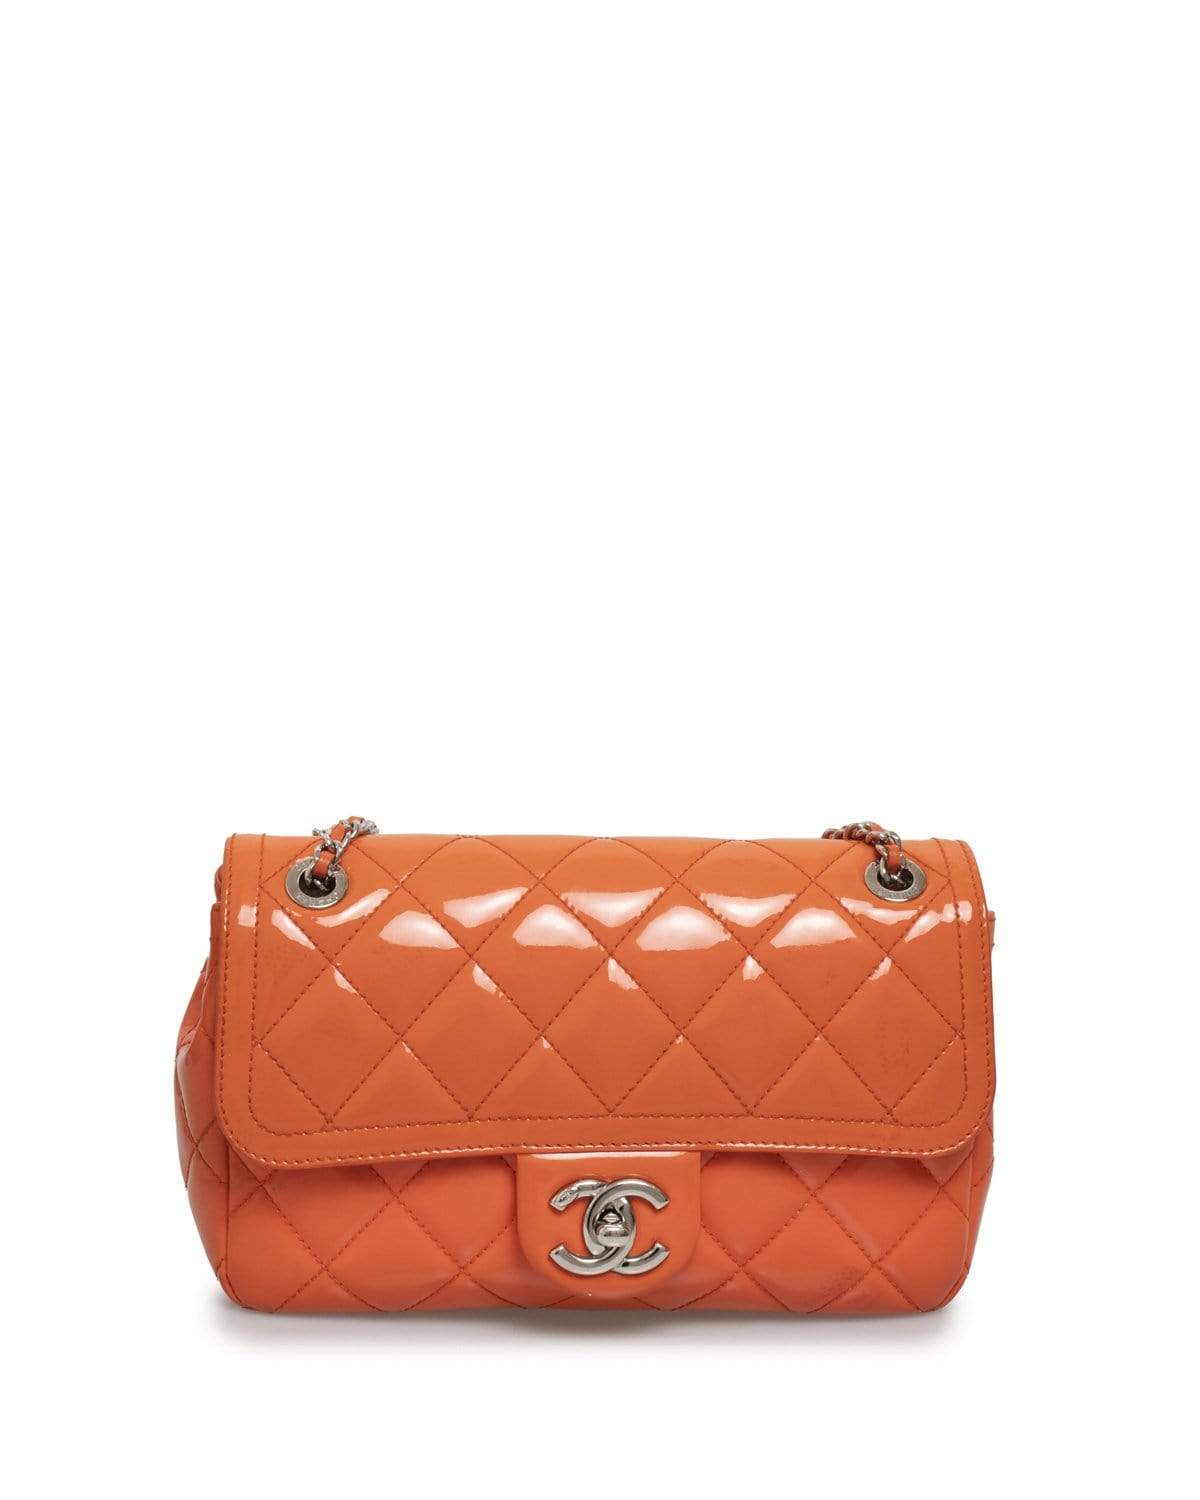 Chanel Chanel Orange Patent Leather 8.5' Classic Flap Bag PHW - AGC1043